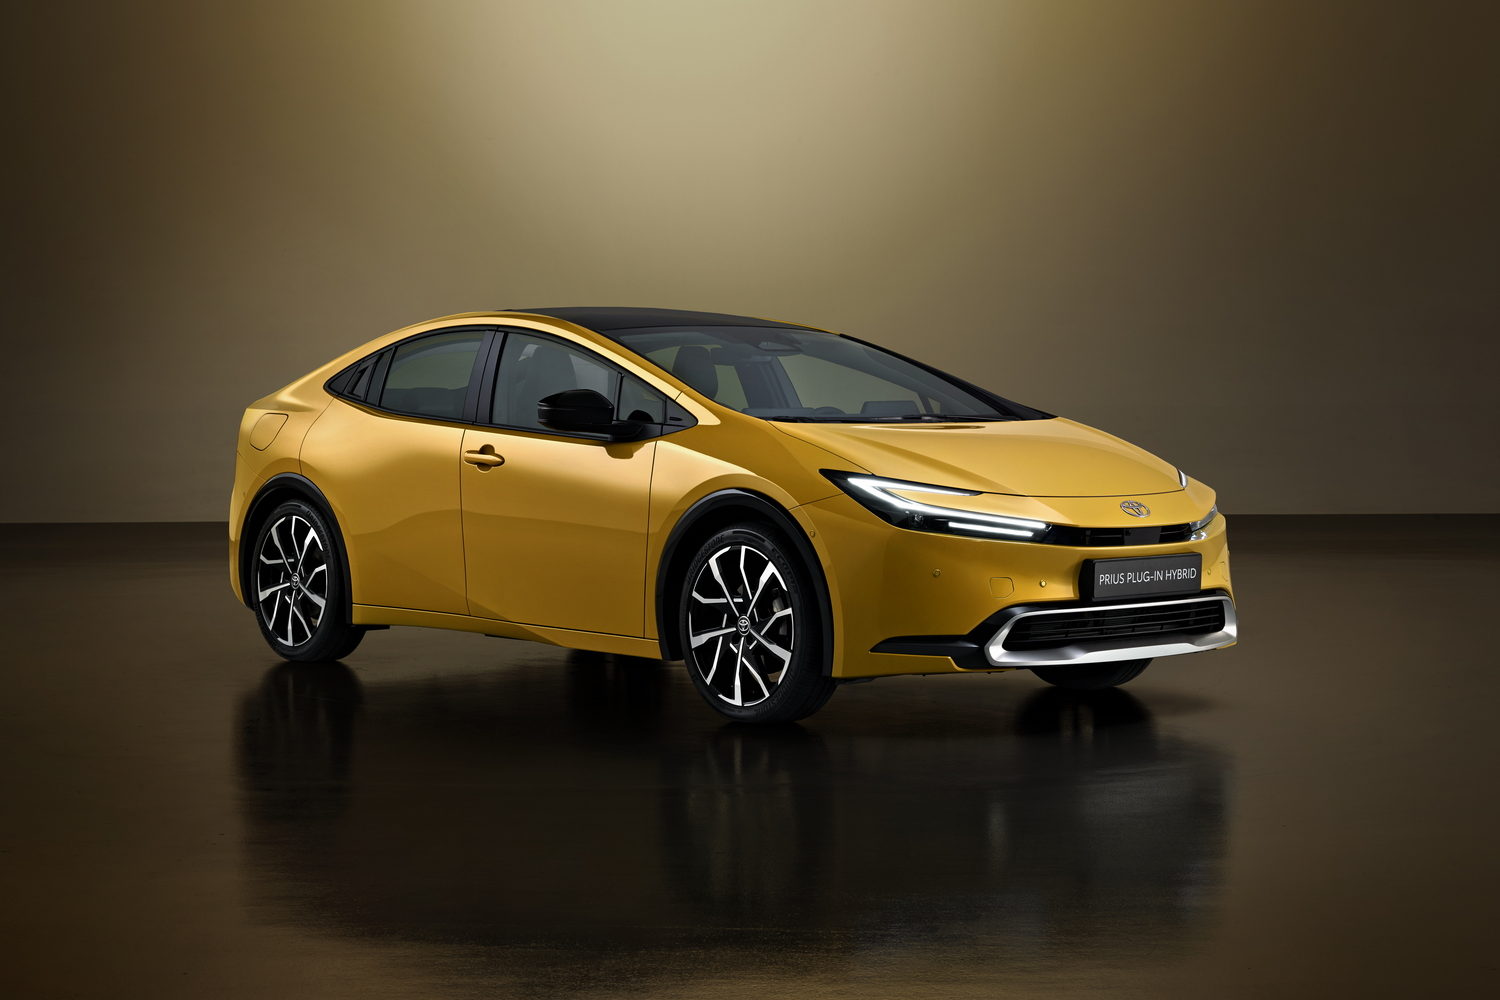 Car News | Toyota shows off 2023 hybrid Prius | CompleteCar.ie